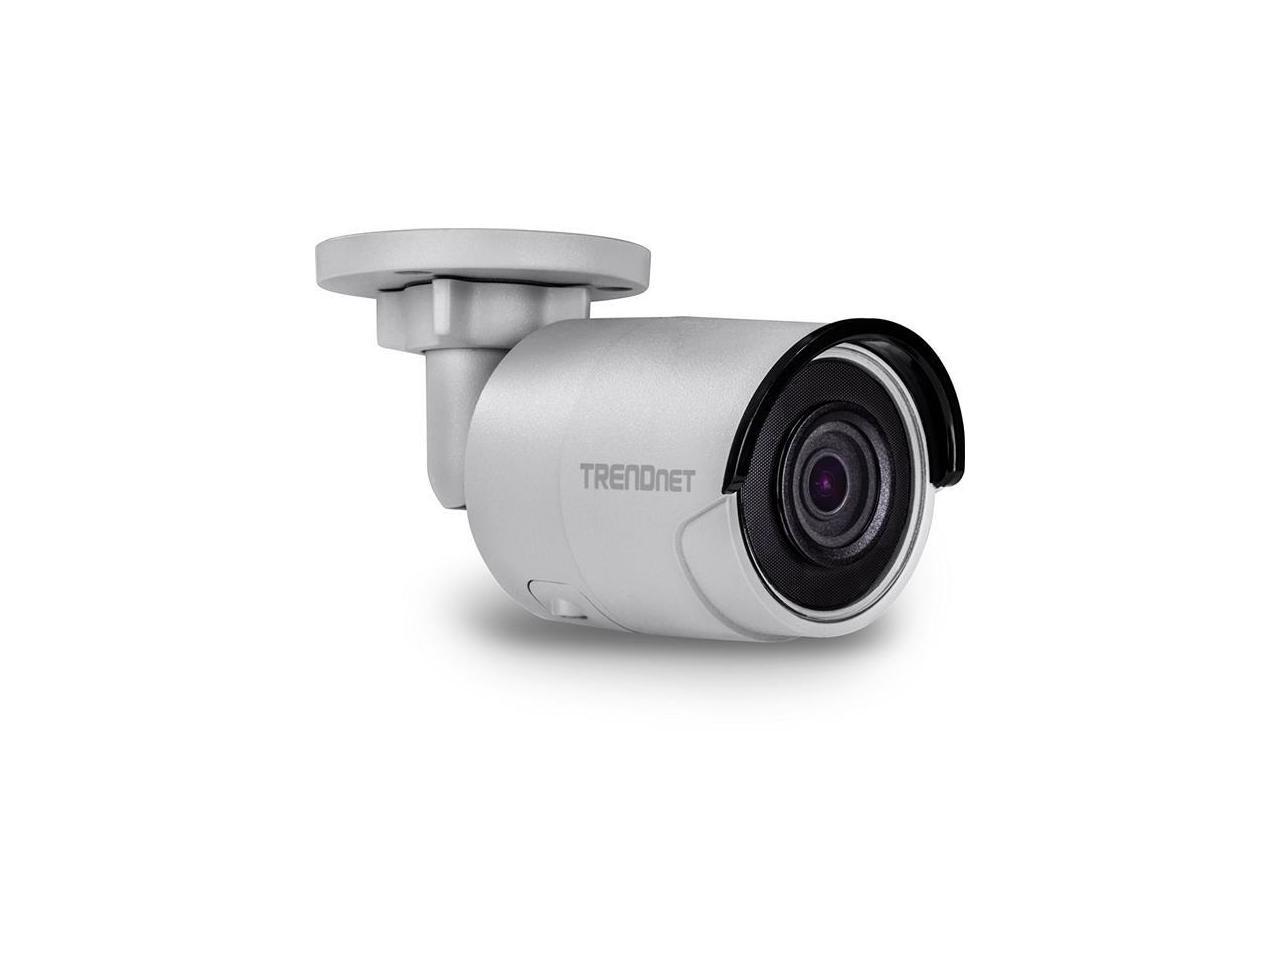 TRENDnet Indroutdr 5Mp H265 Camera (TV-IP316PI)